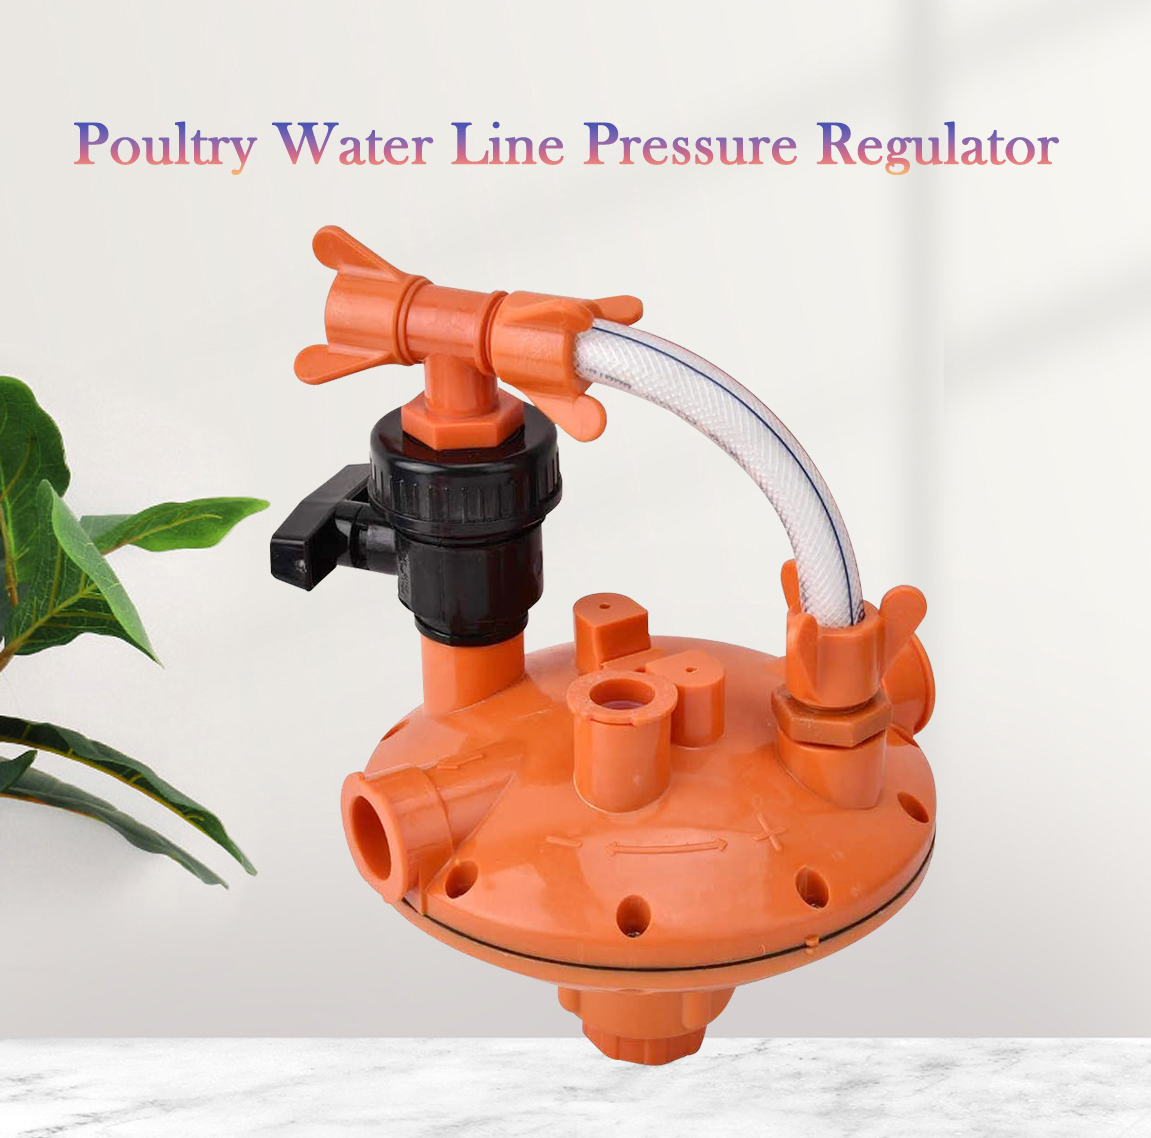 Poultry Water Line Pressure Regulator